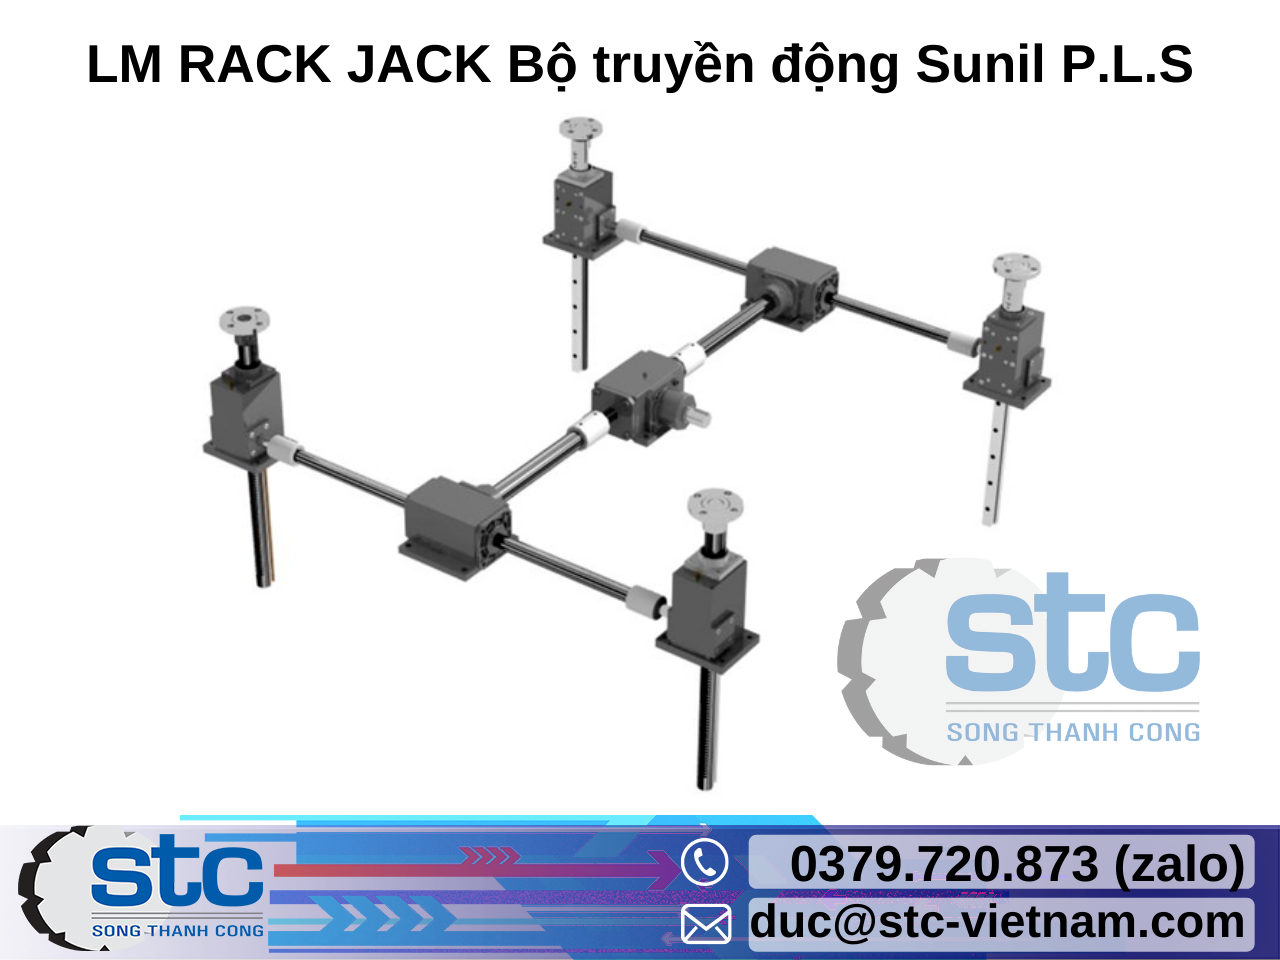 lm-rack-jack-bo-truyen-dong-sunil-p-l-s.png